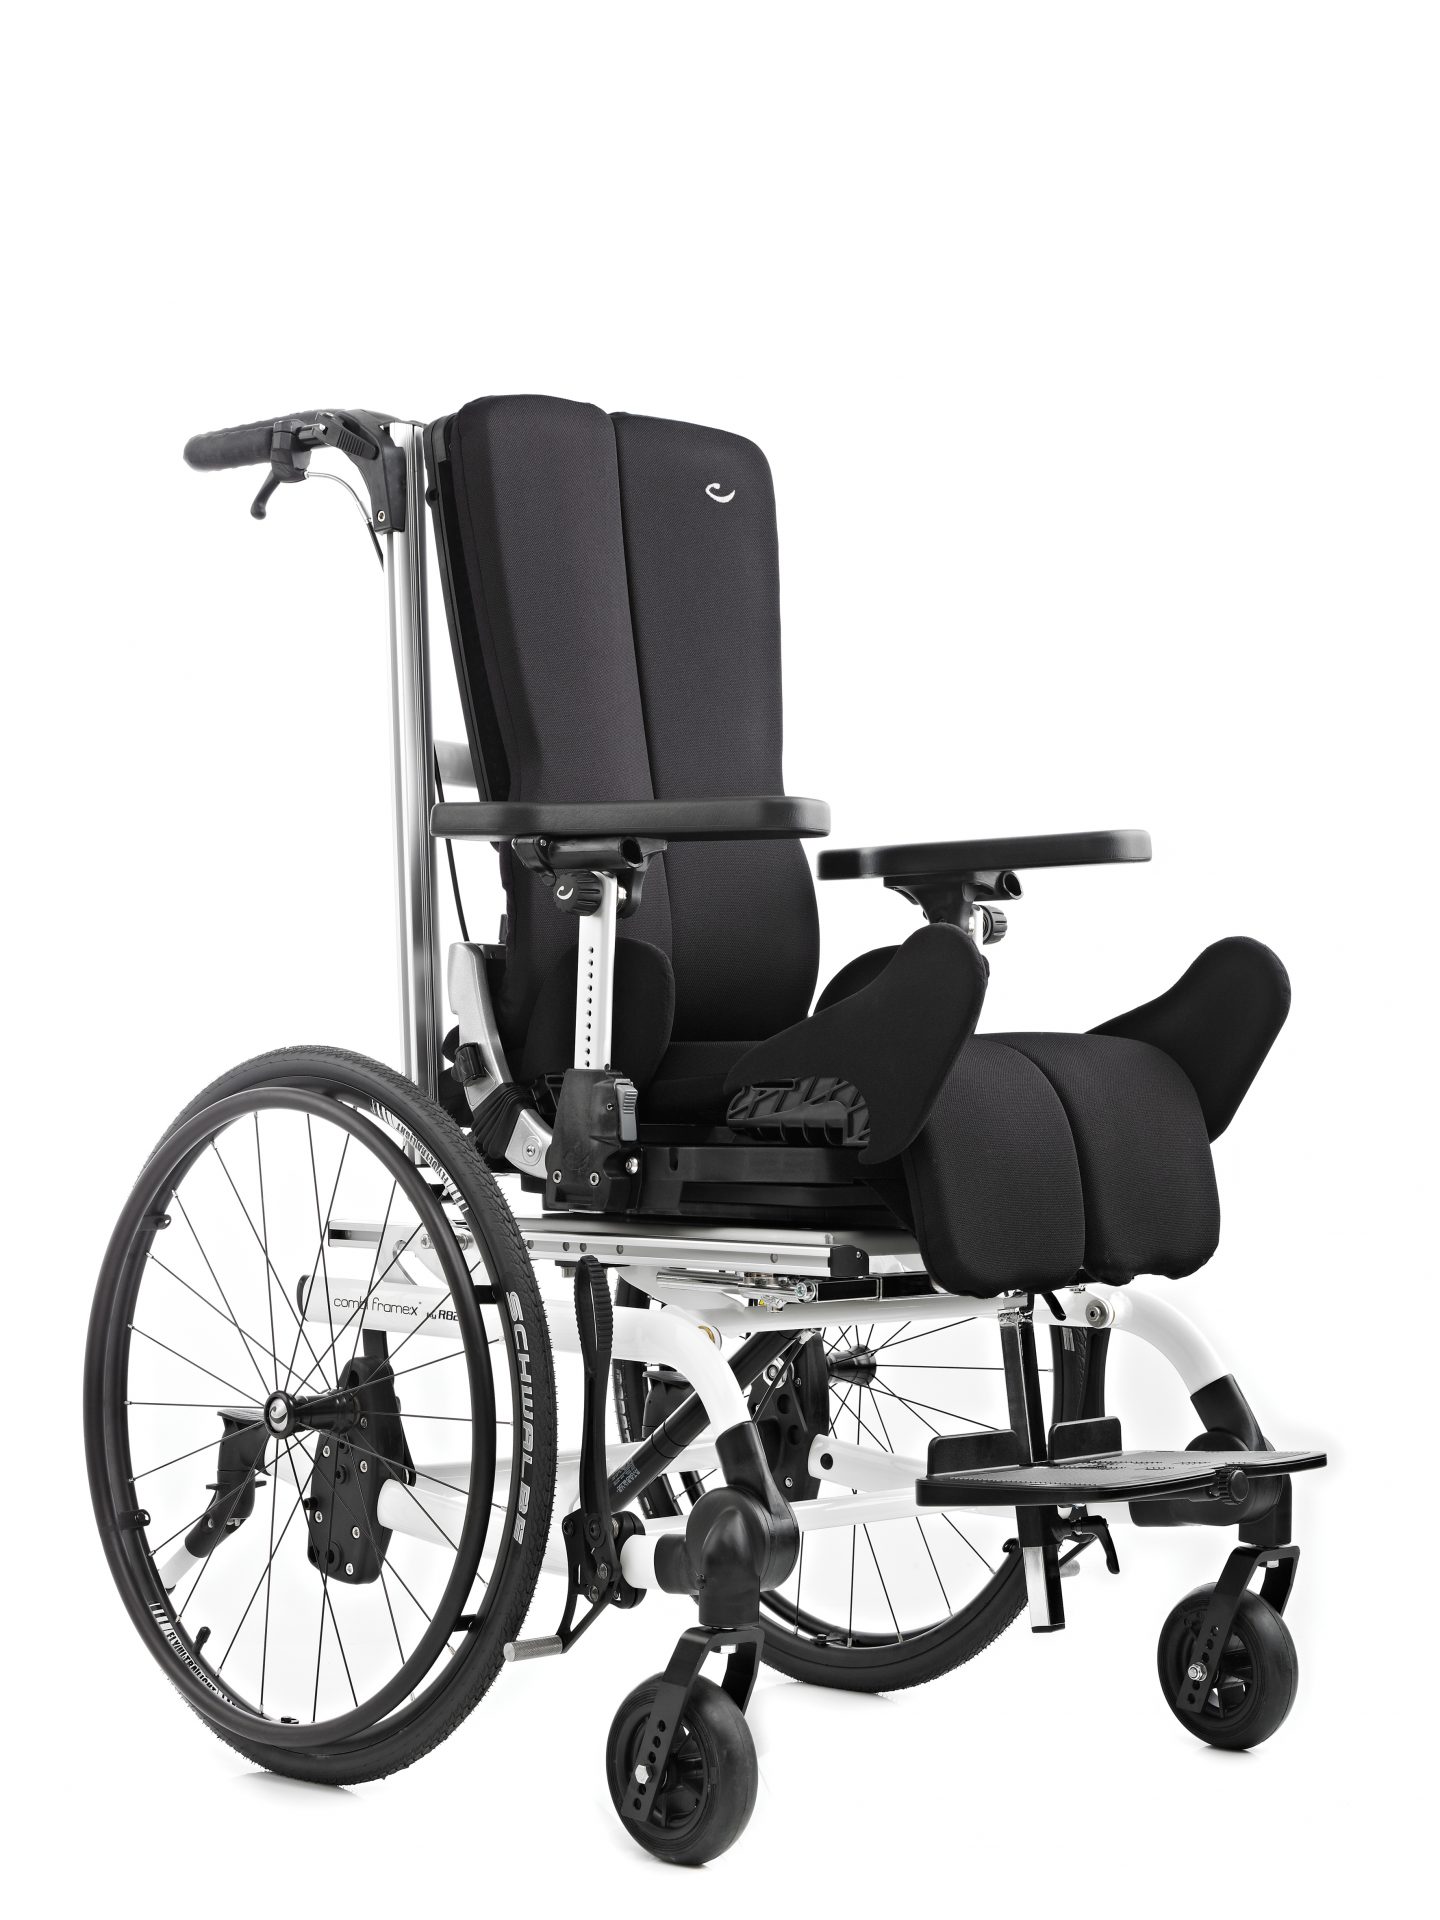 Кресло-коляска активного типа X Panda (Икс Панда) рама Multi frame с большими задними колесами фото 1